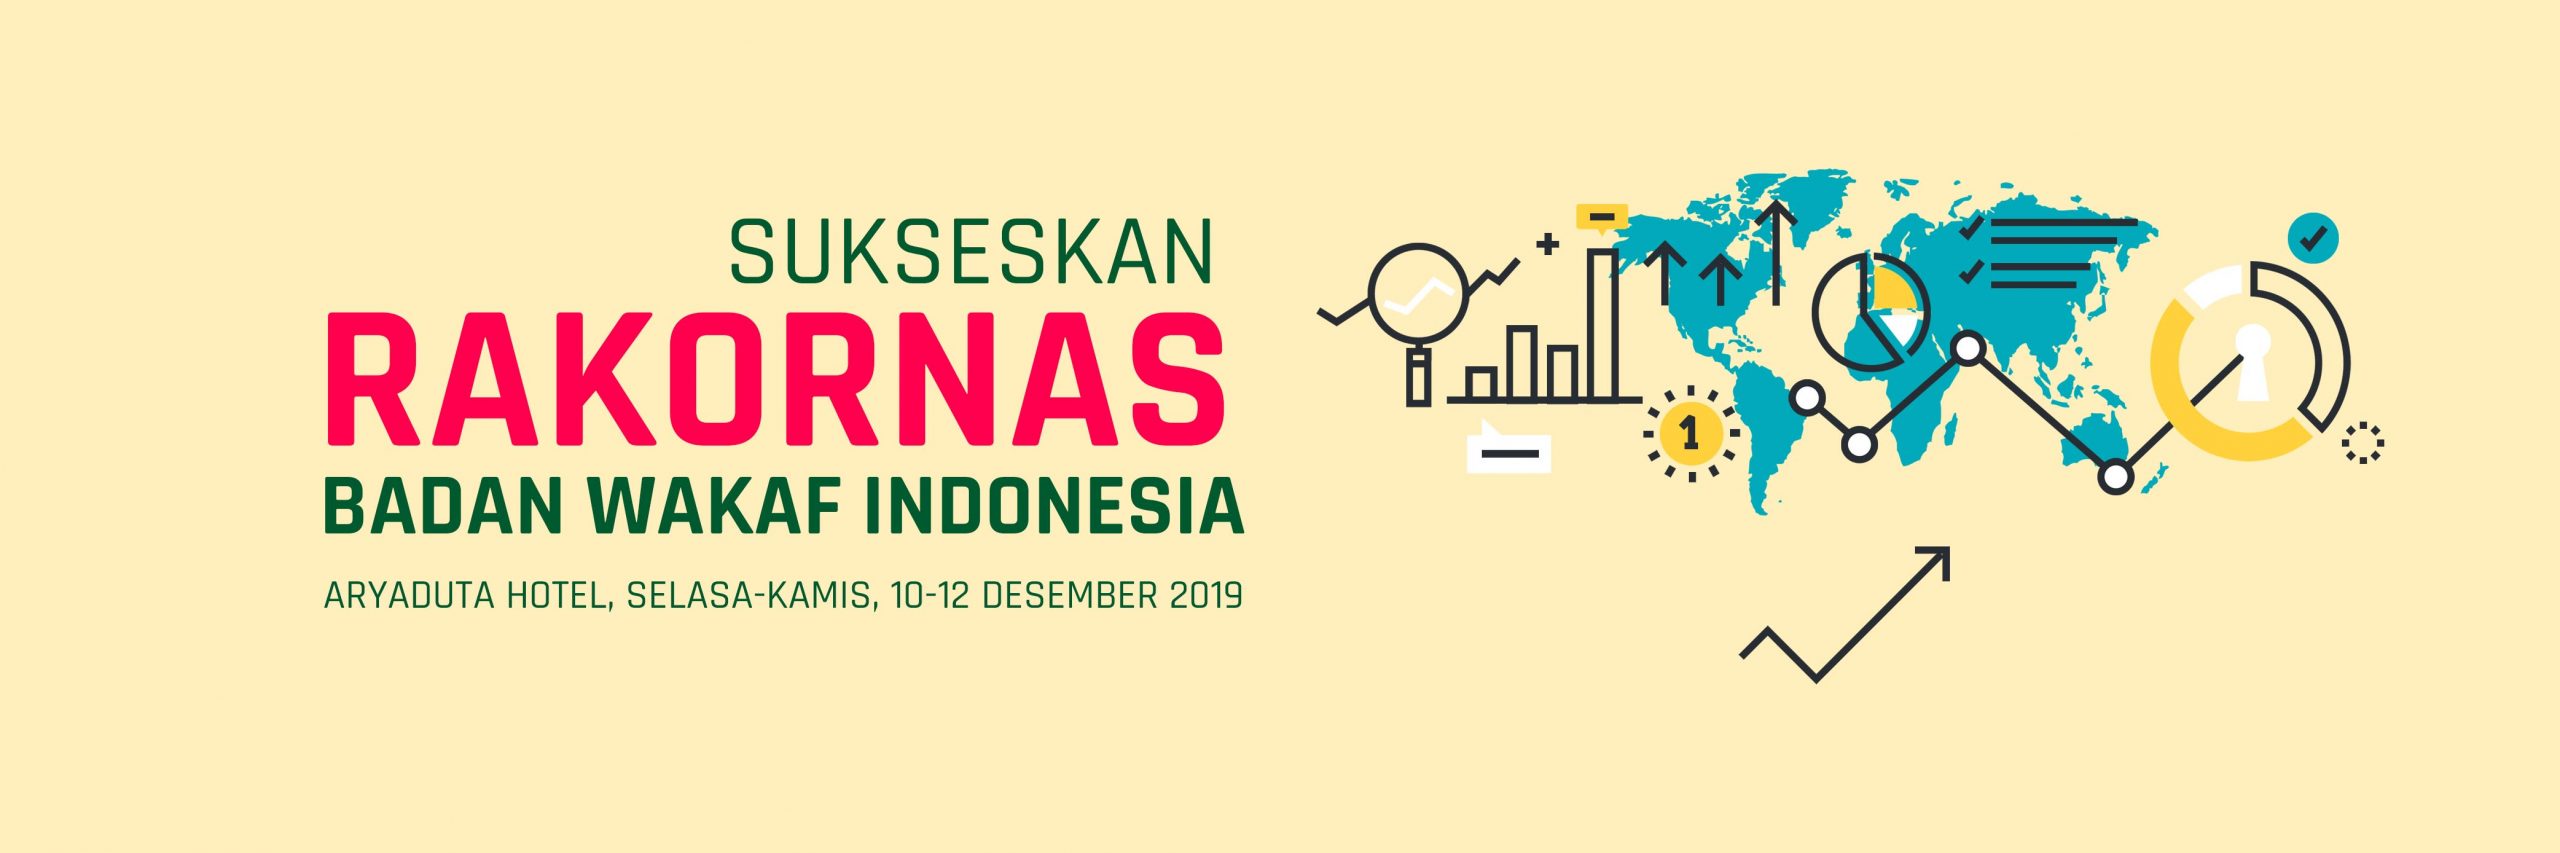 Badan Wakaf Indonesia Gelar Rakornas 2019  - Sukseskan Rakornas BWI scaled - Badan Wakaf Indonesia Gelar Rakornas 2019